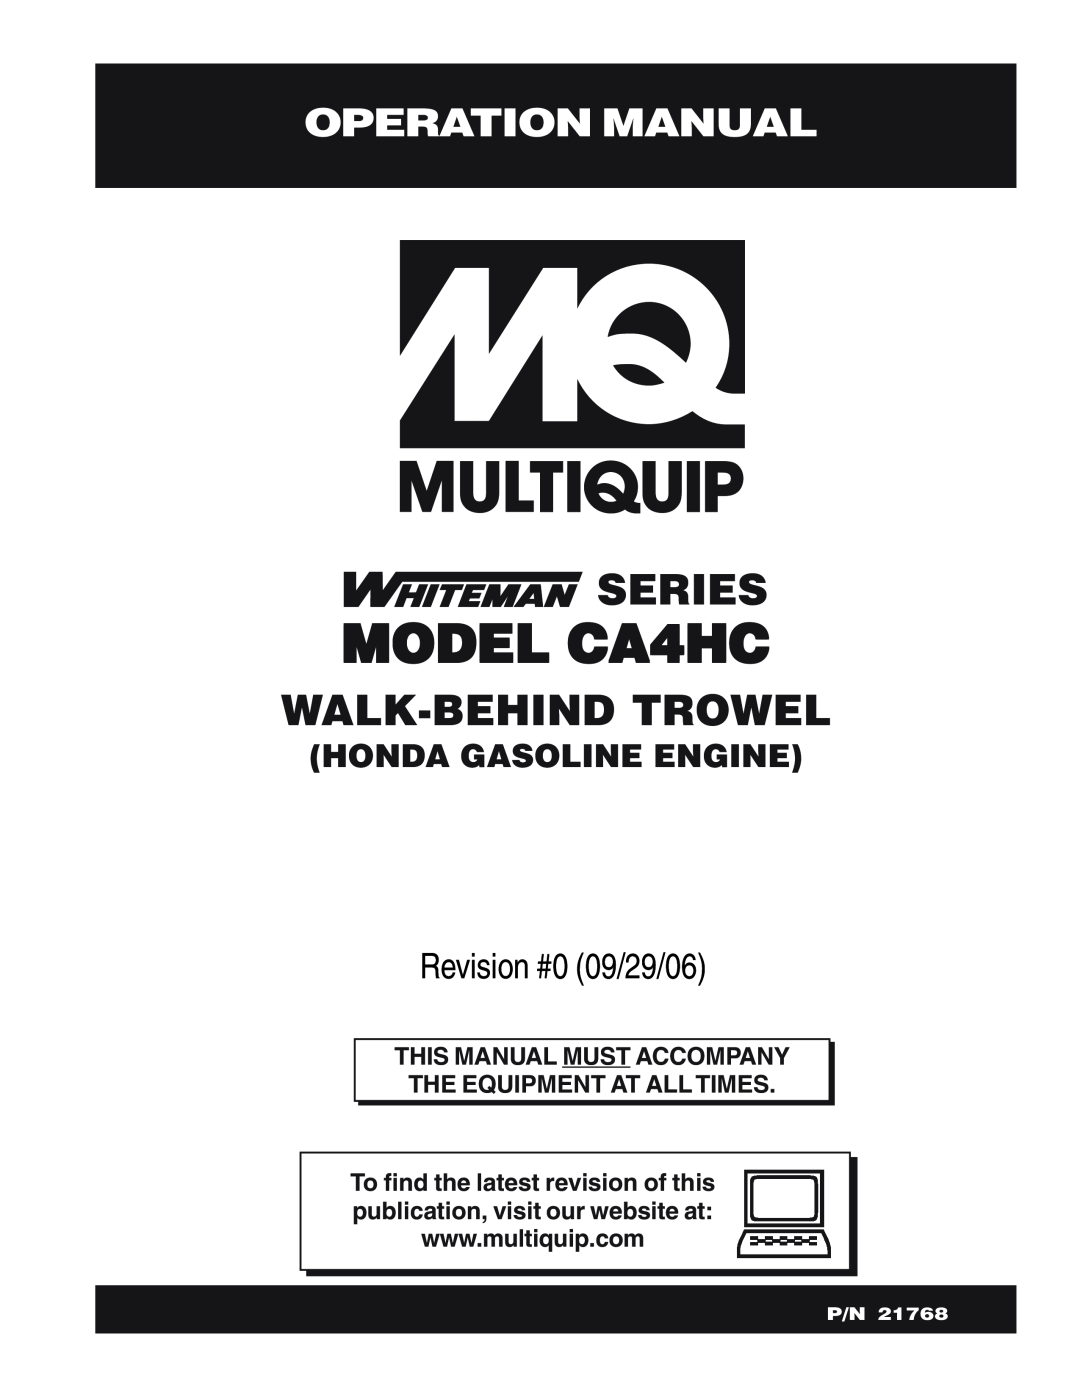 Multiquip operation manual Operation Manual, MODEL CA4HC, Series, Walk-Behindtrowel, Revision #0 09/29/06 